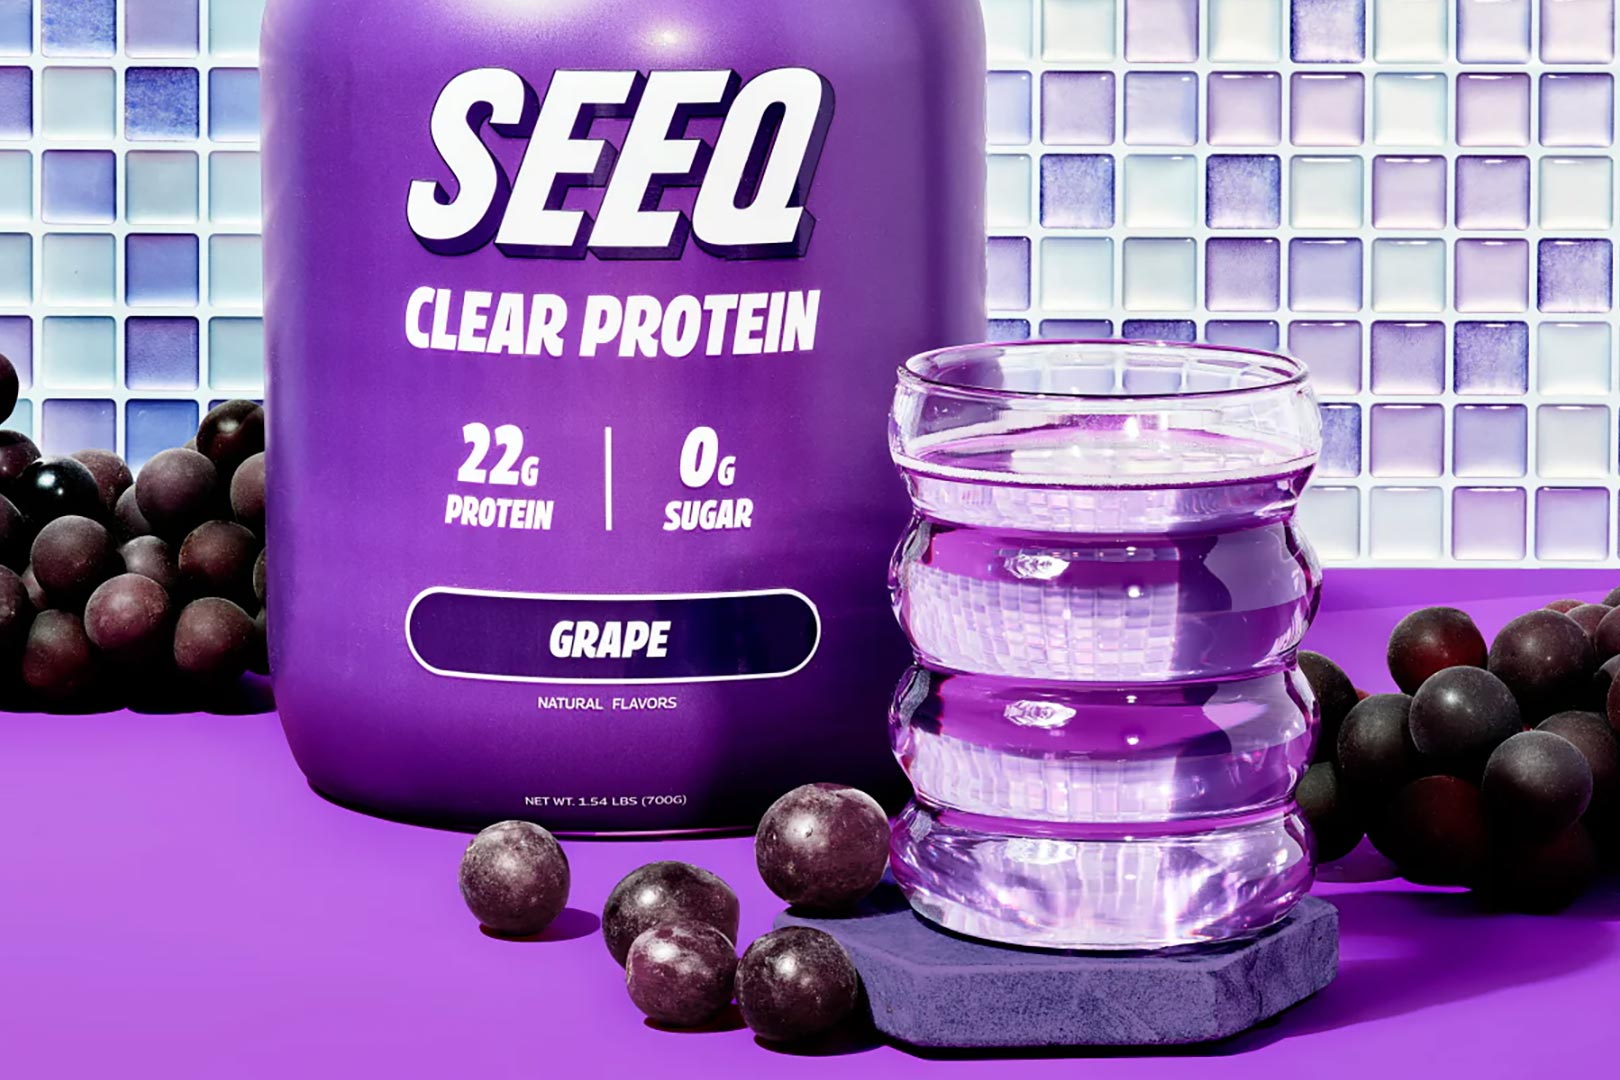 Seeq Grape Clear Protein